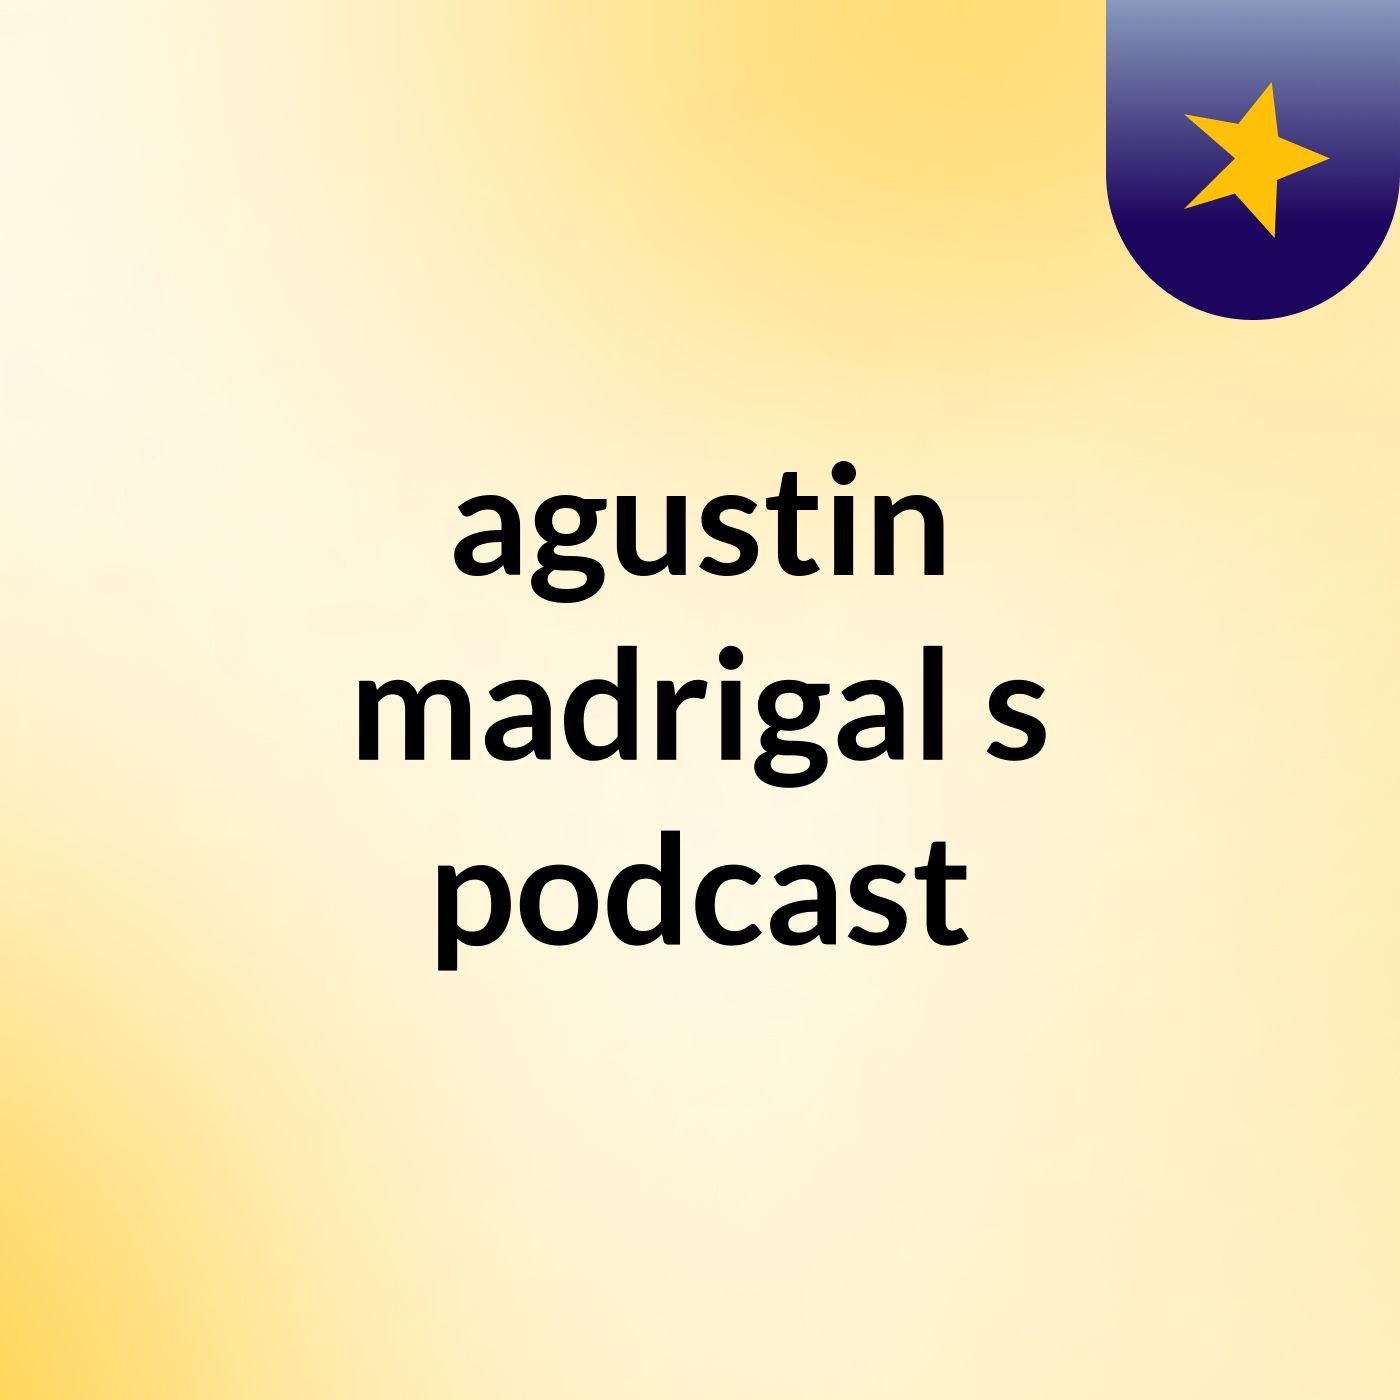 Agustin madrigal